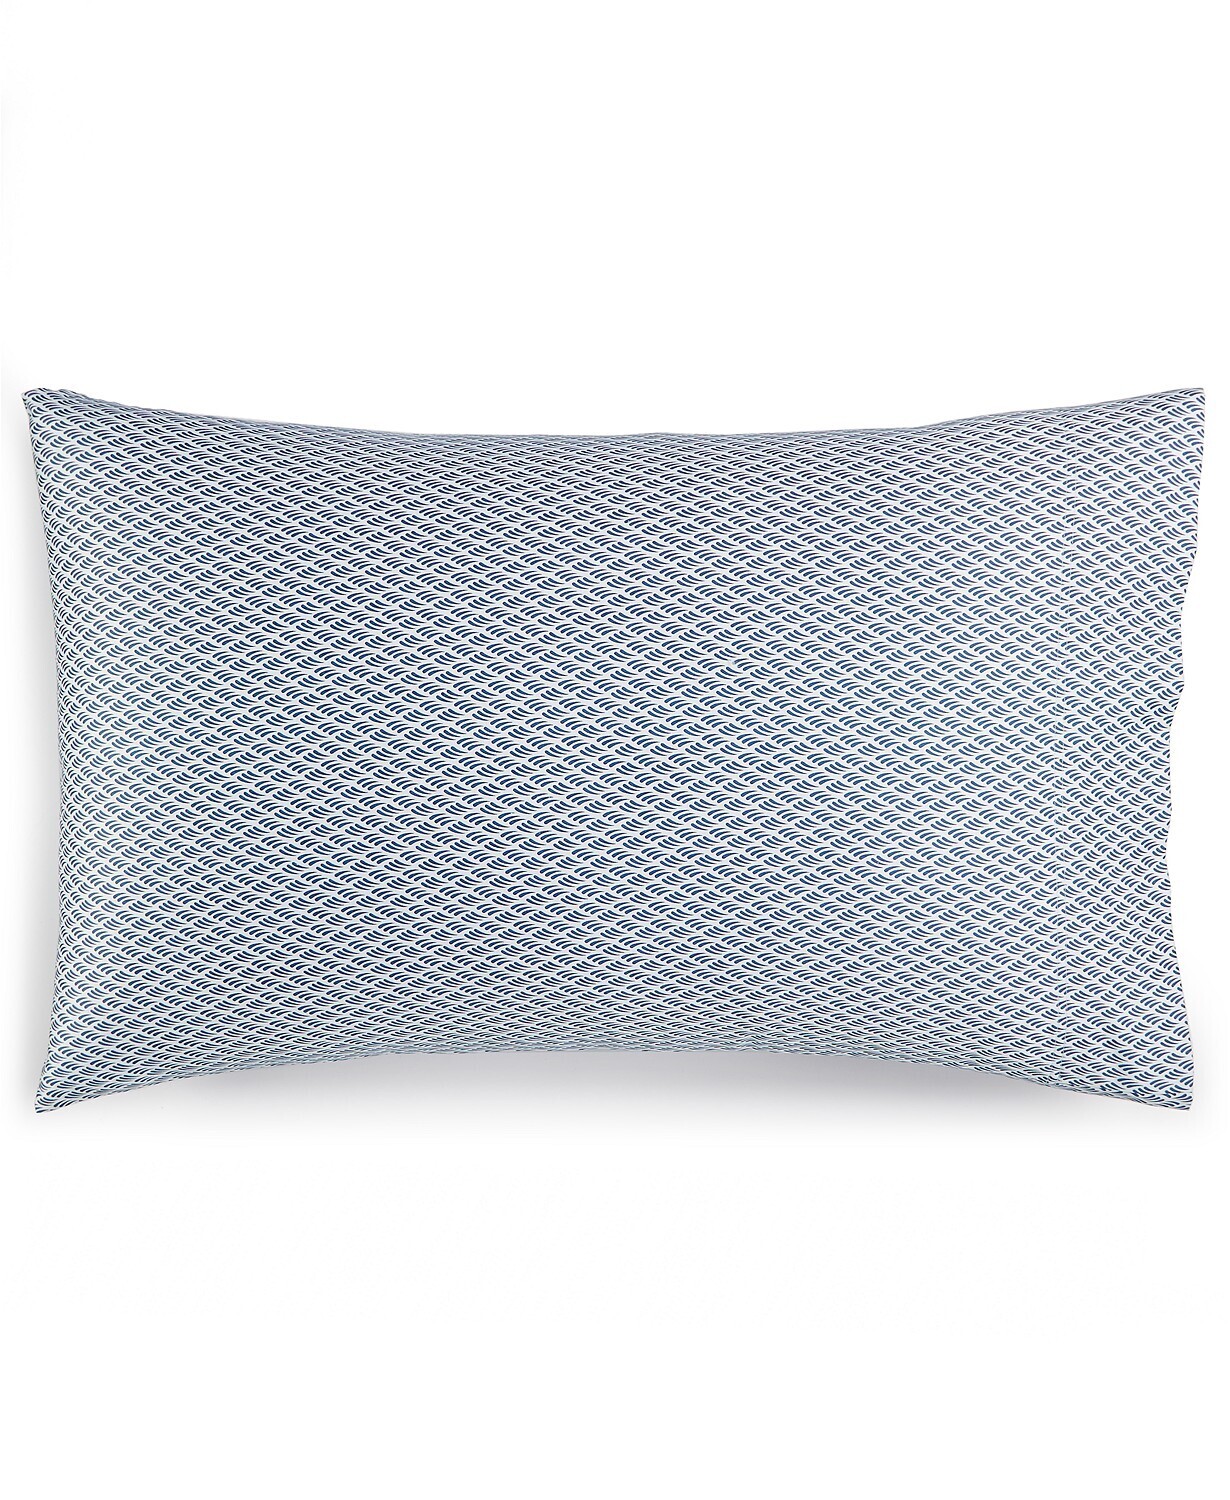 Charter Club Damask Designs Printed Standard Pillowcases Pair, 550 Thread Count